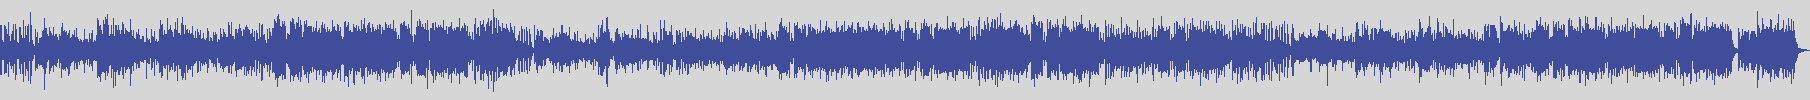 digiphonic_records [DPR013] Little Tony - Riderà [Original Mix] audio wave form